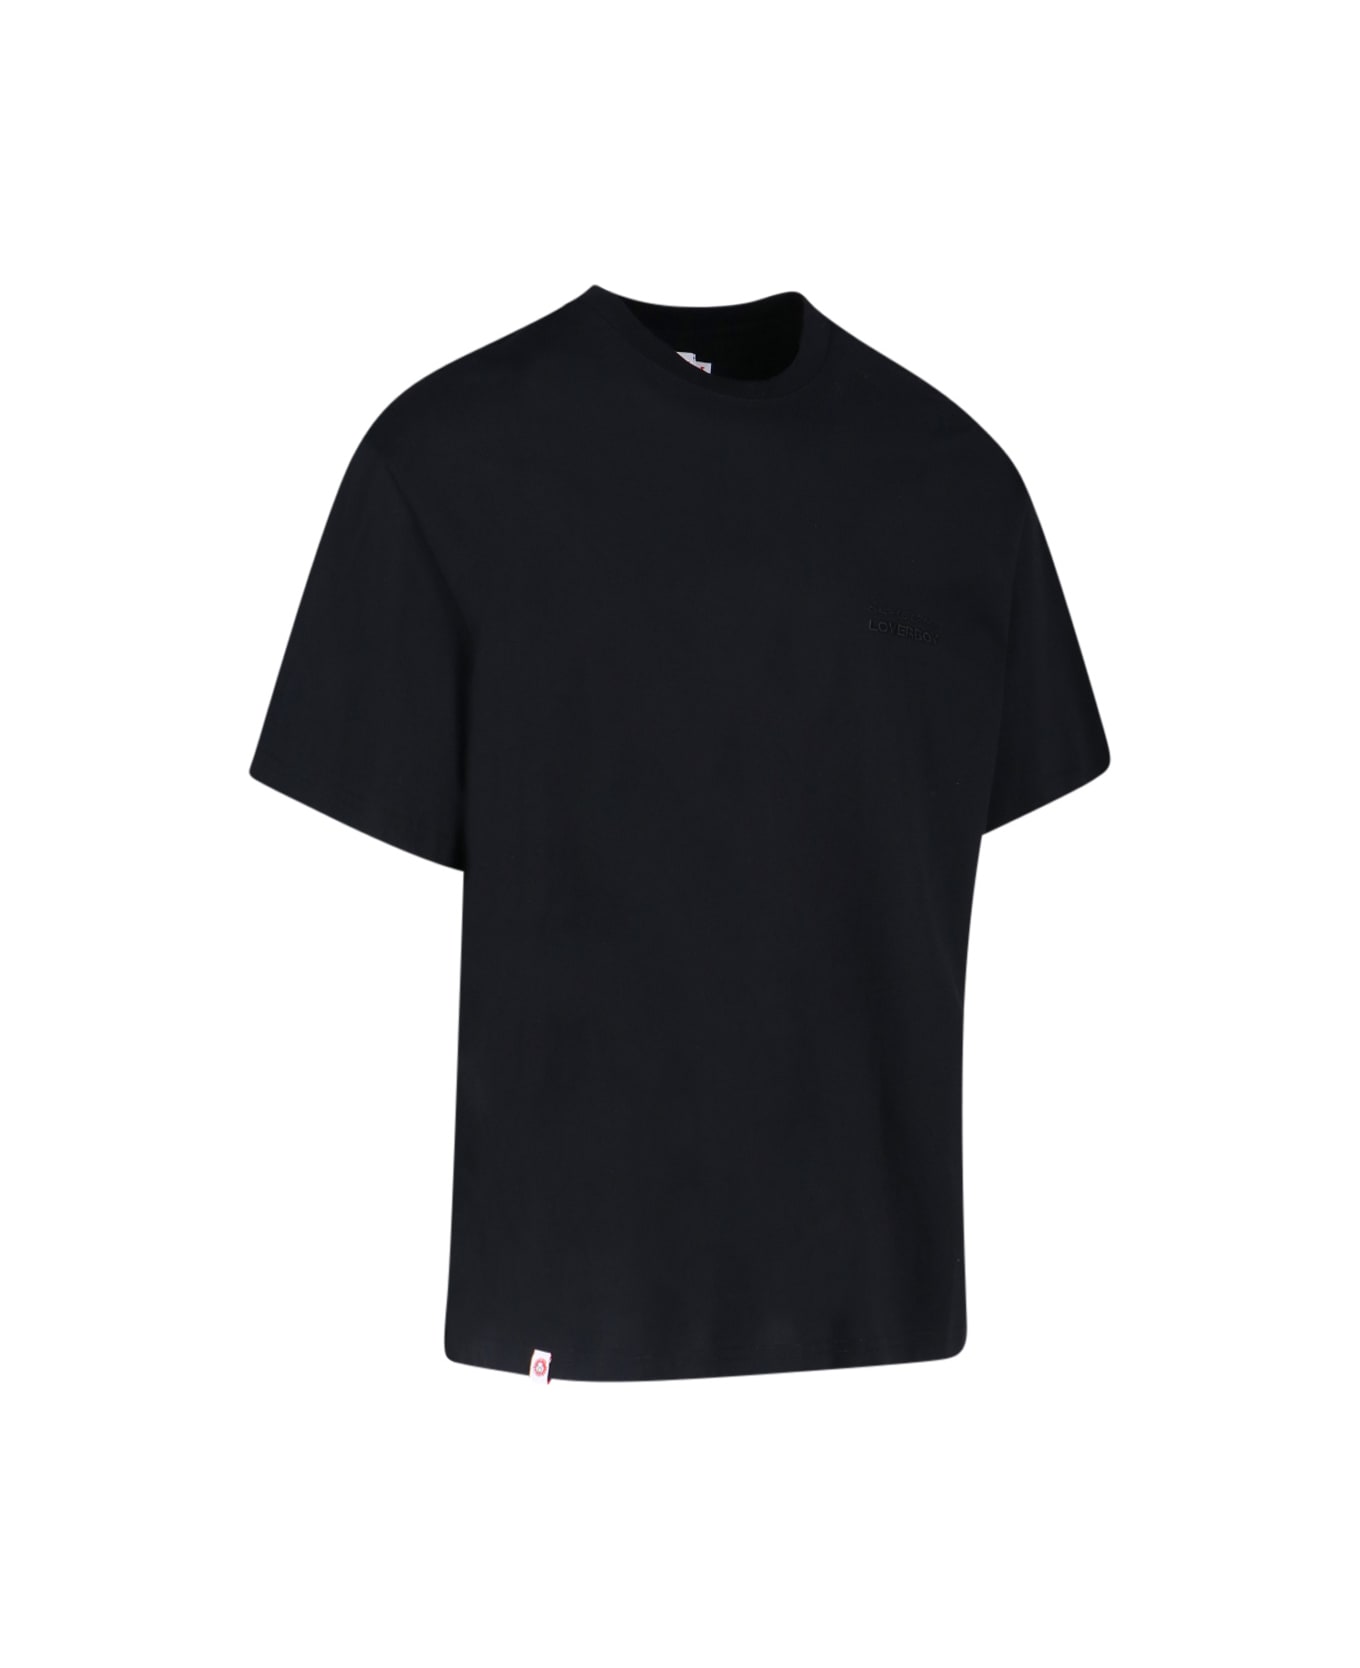 Charles Jeffrey Loverboy T-Shirt - Black